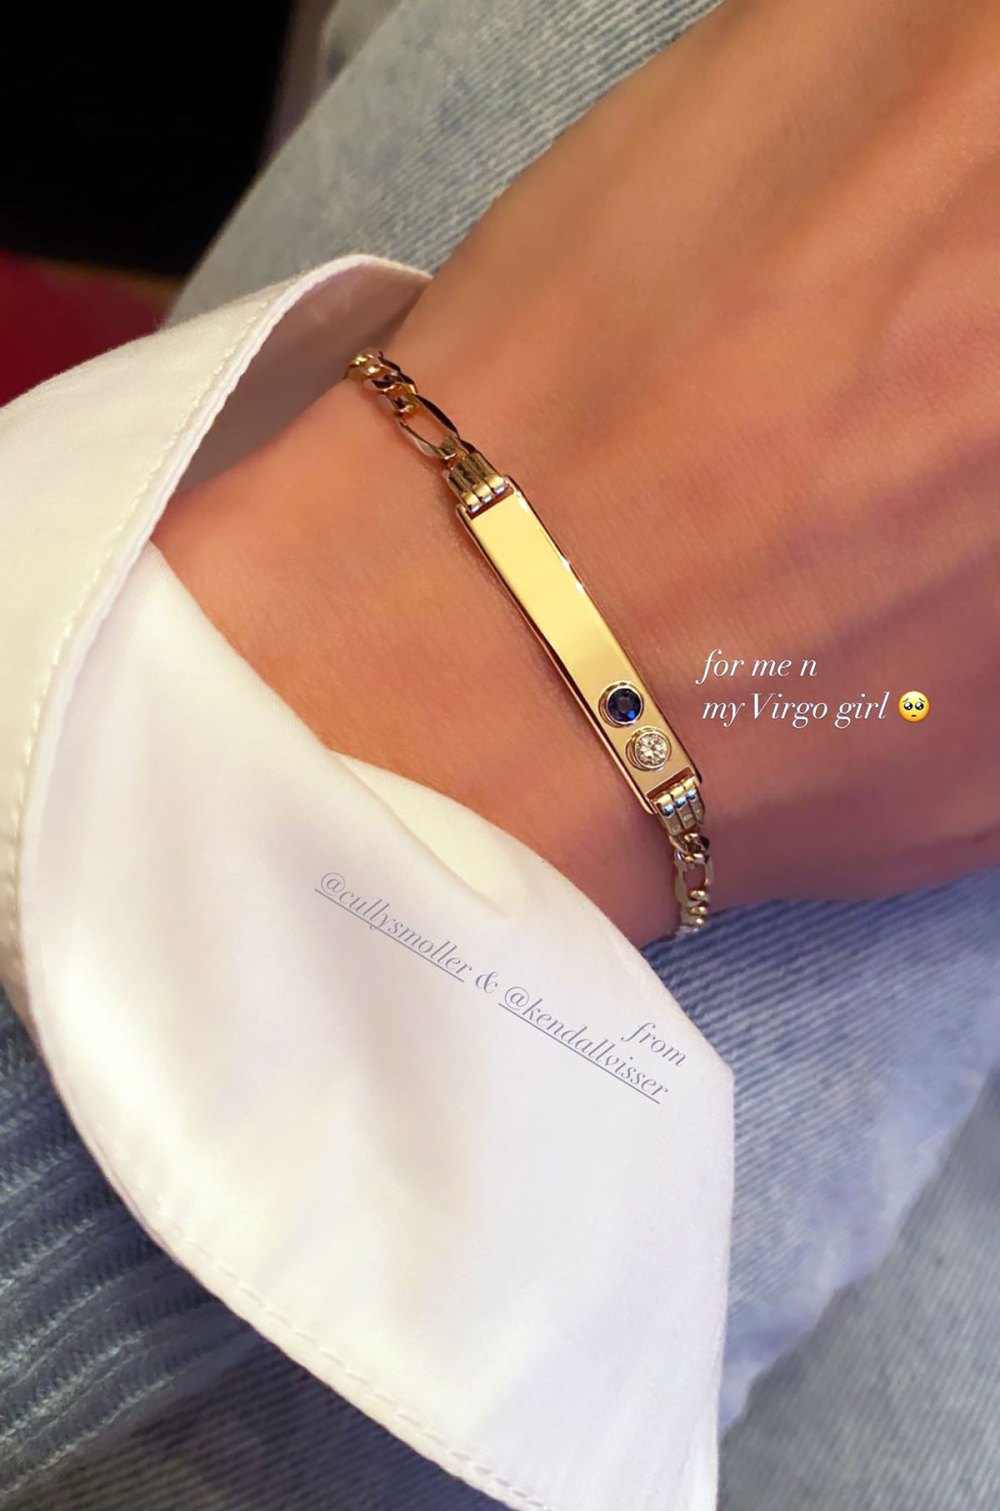 Gigi Hadid Shows Off a Birthstone Bracelet in Honor of Her 'Virgo Girl'